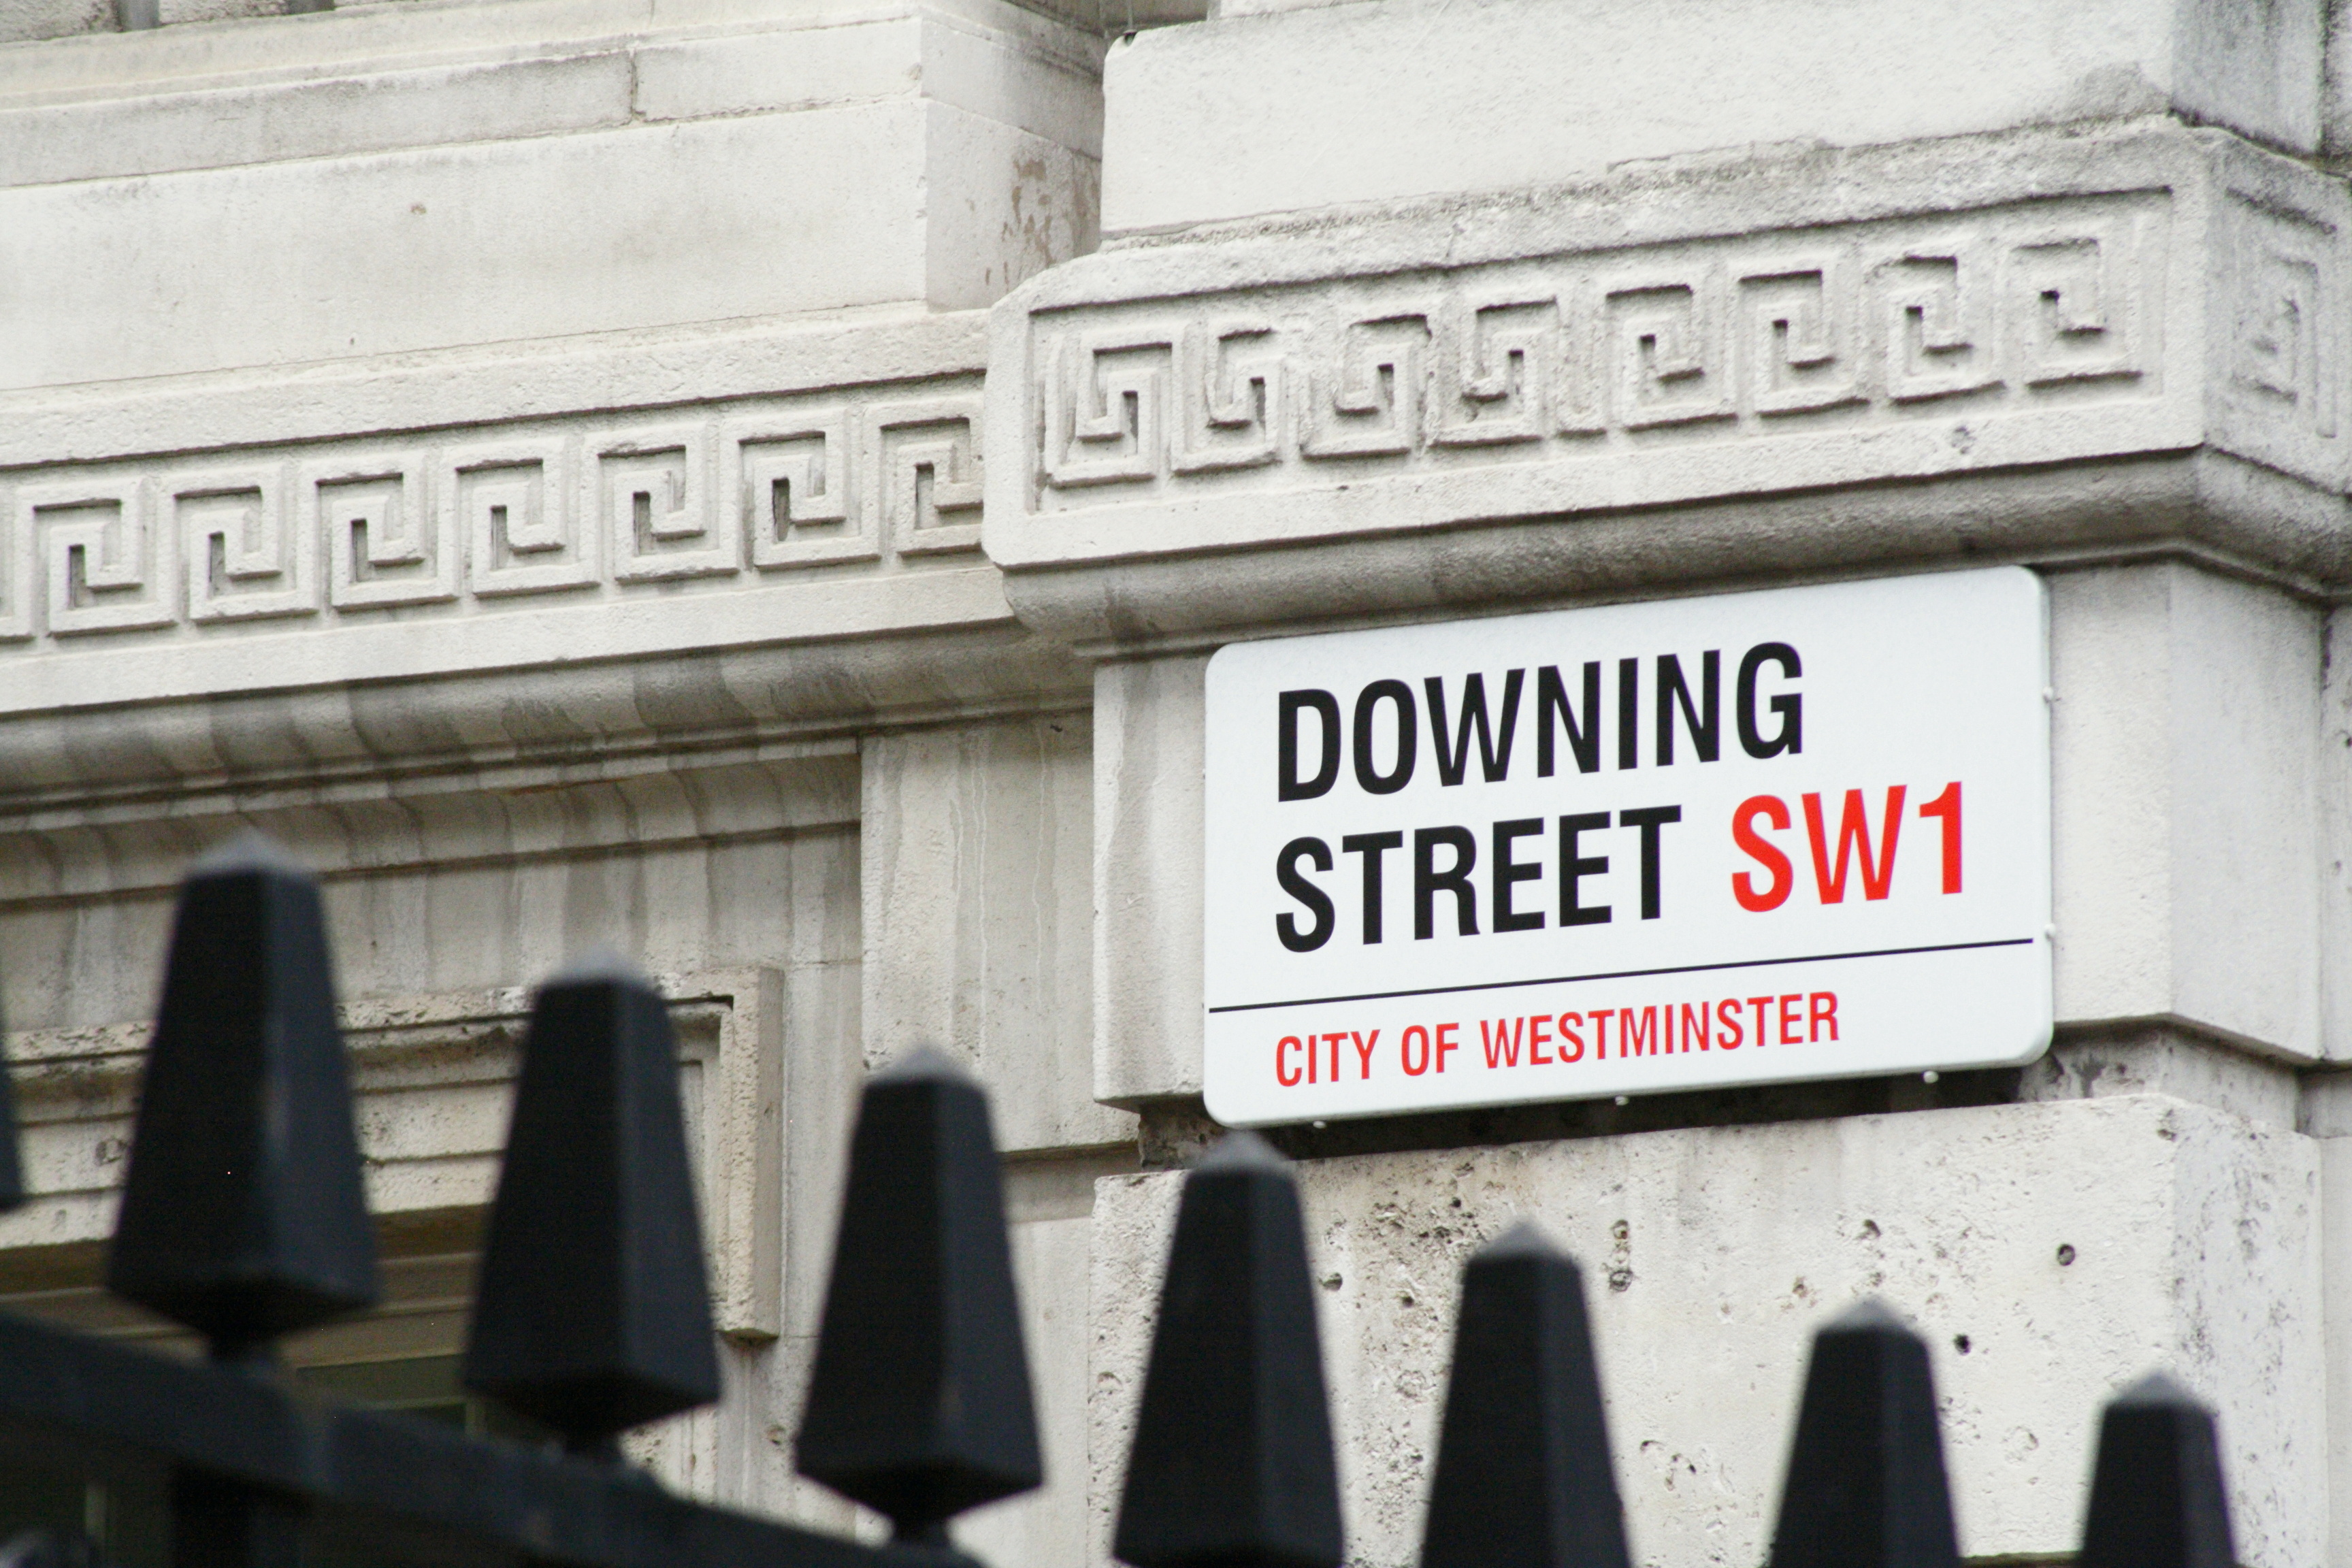 No 10 Downing Street - Liz Truss resigns as PM